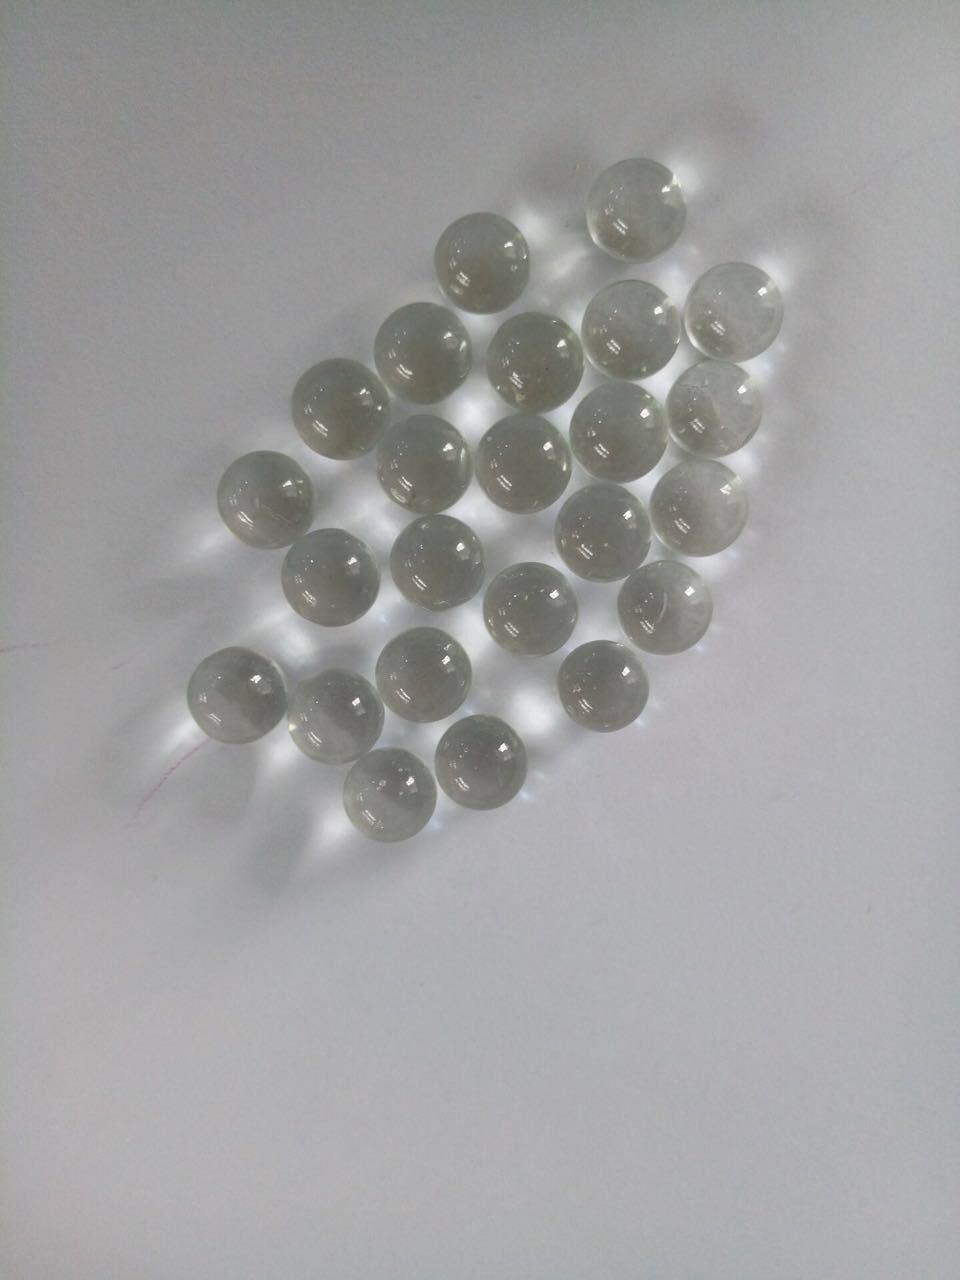 Precise Glass Beads for Bearing-Balls and Ball-Valves of Sprayers